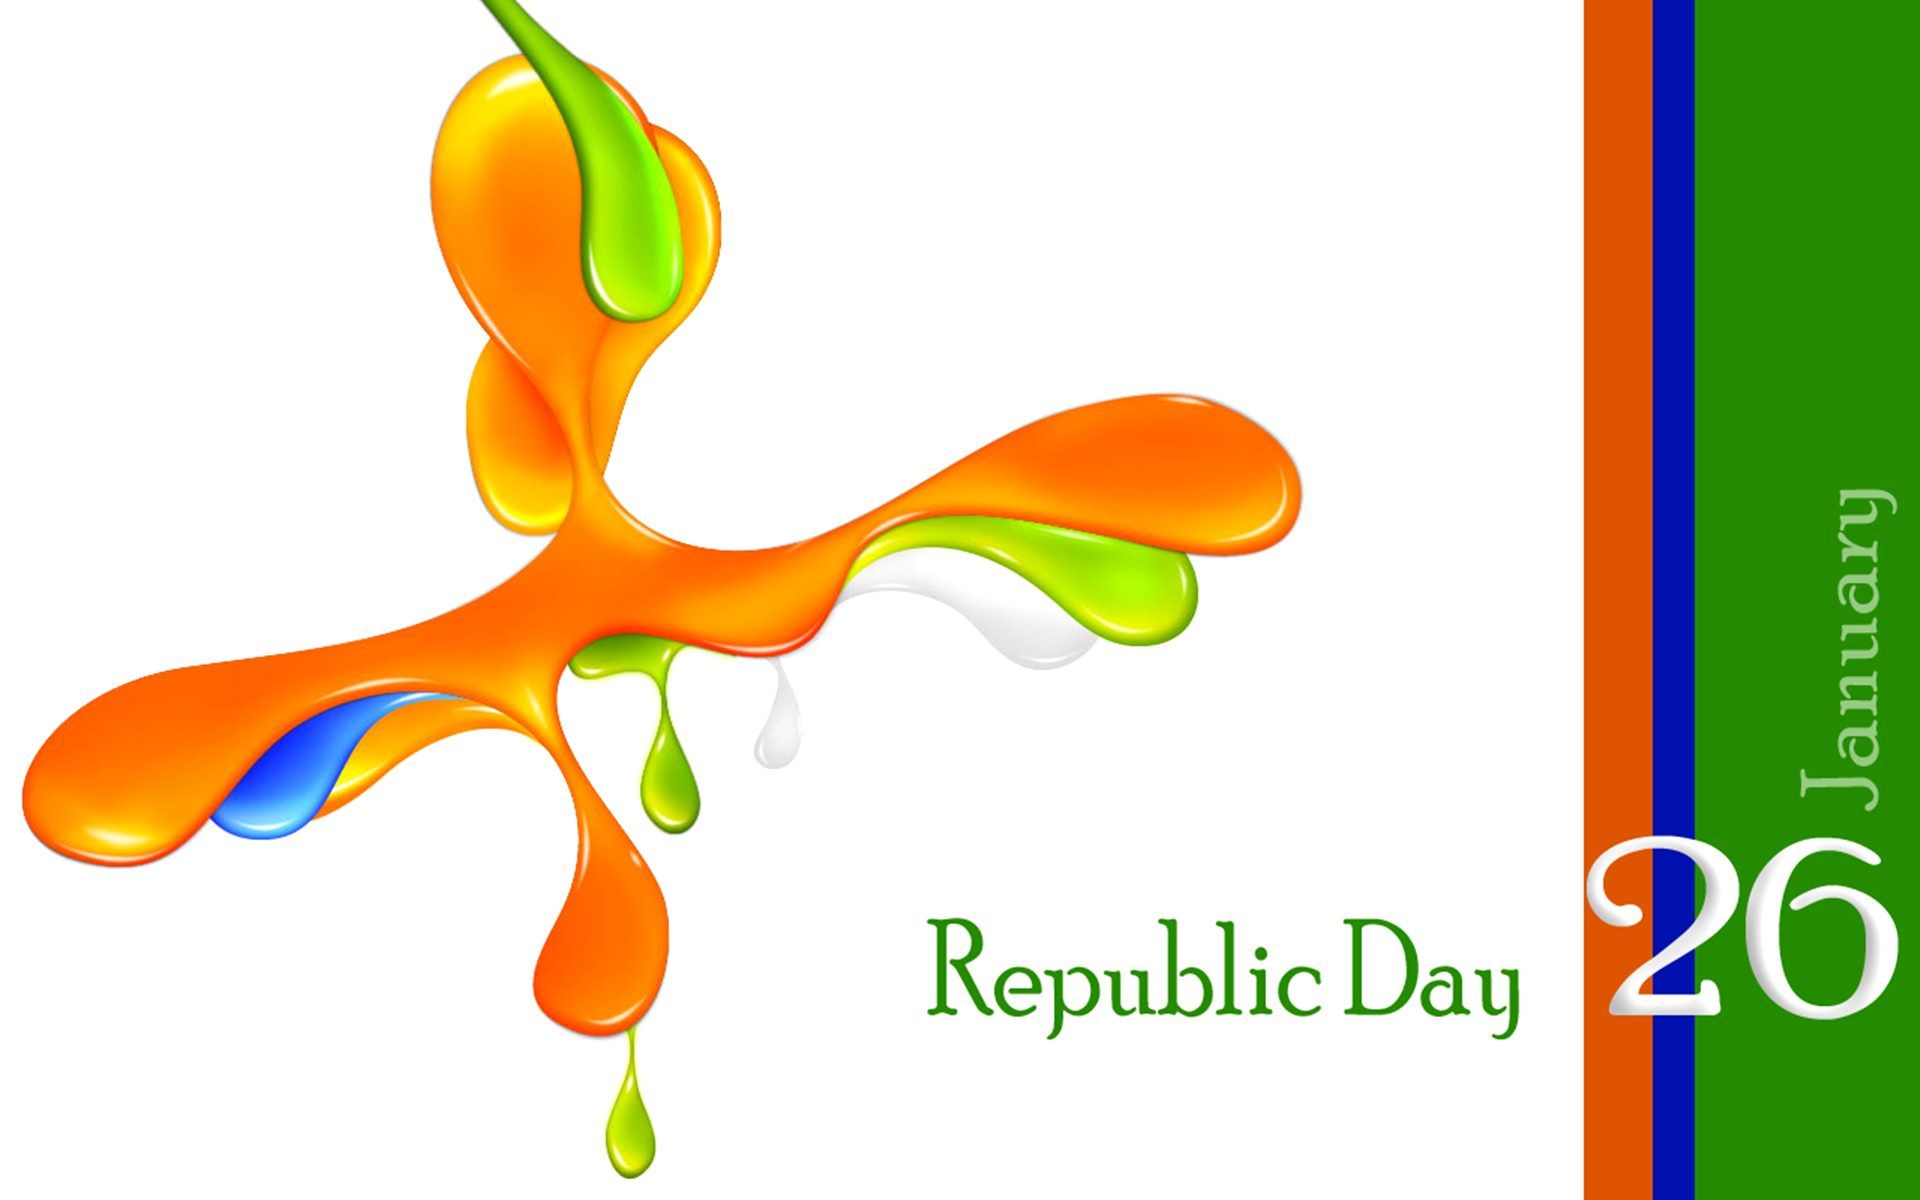 Happy Republic Day 2020 HD Image, UHD Wallpaper, 3D Photo, 4K